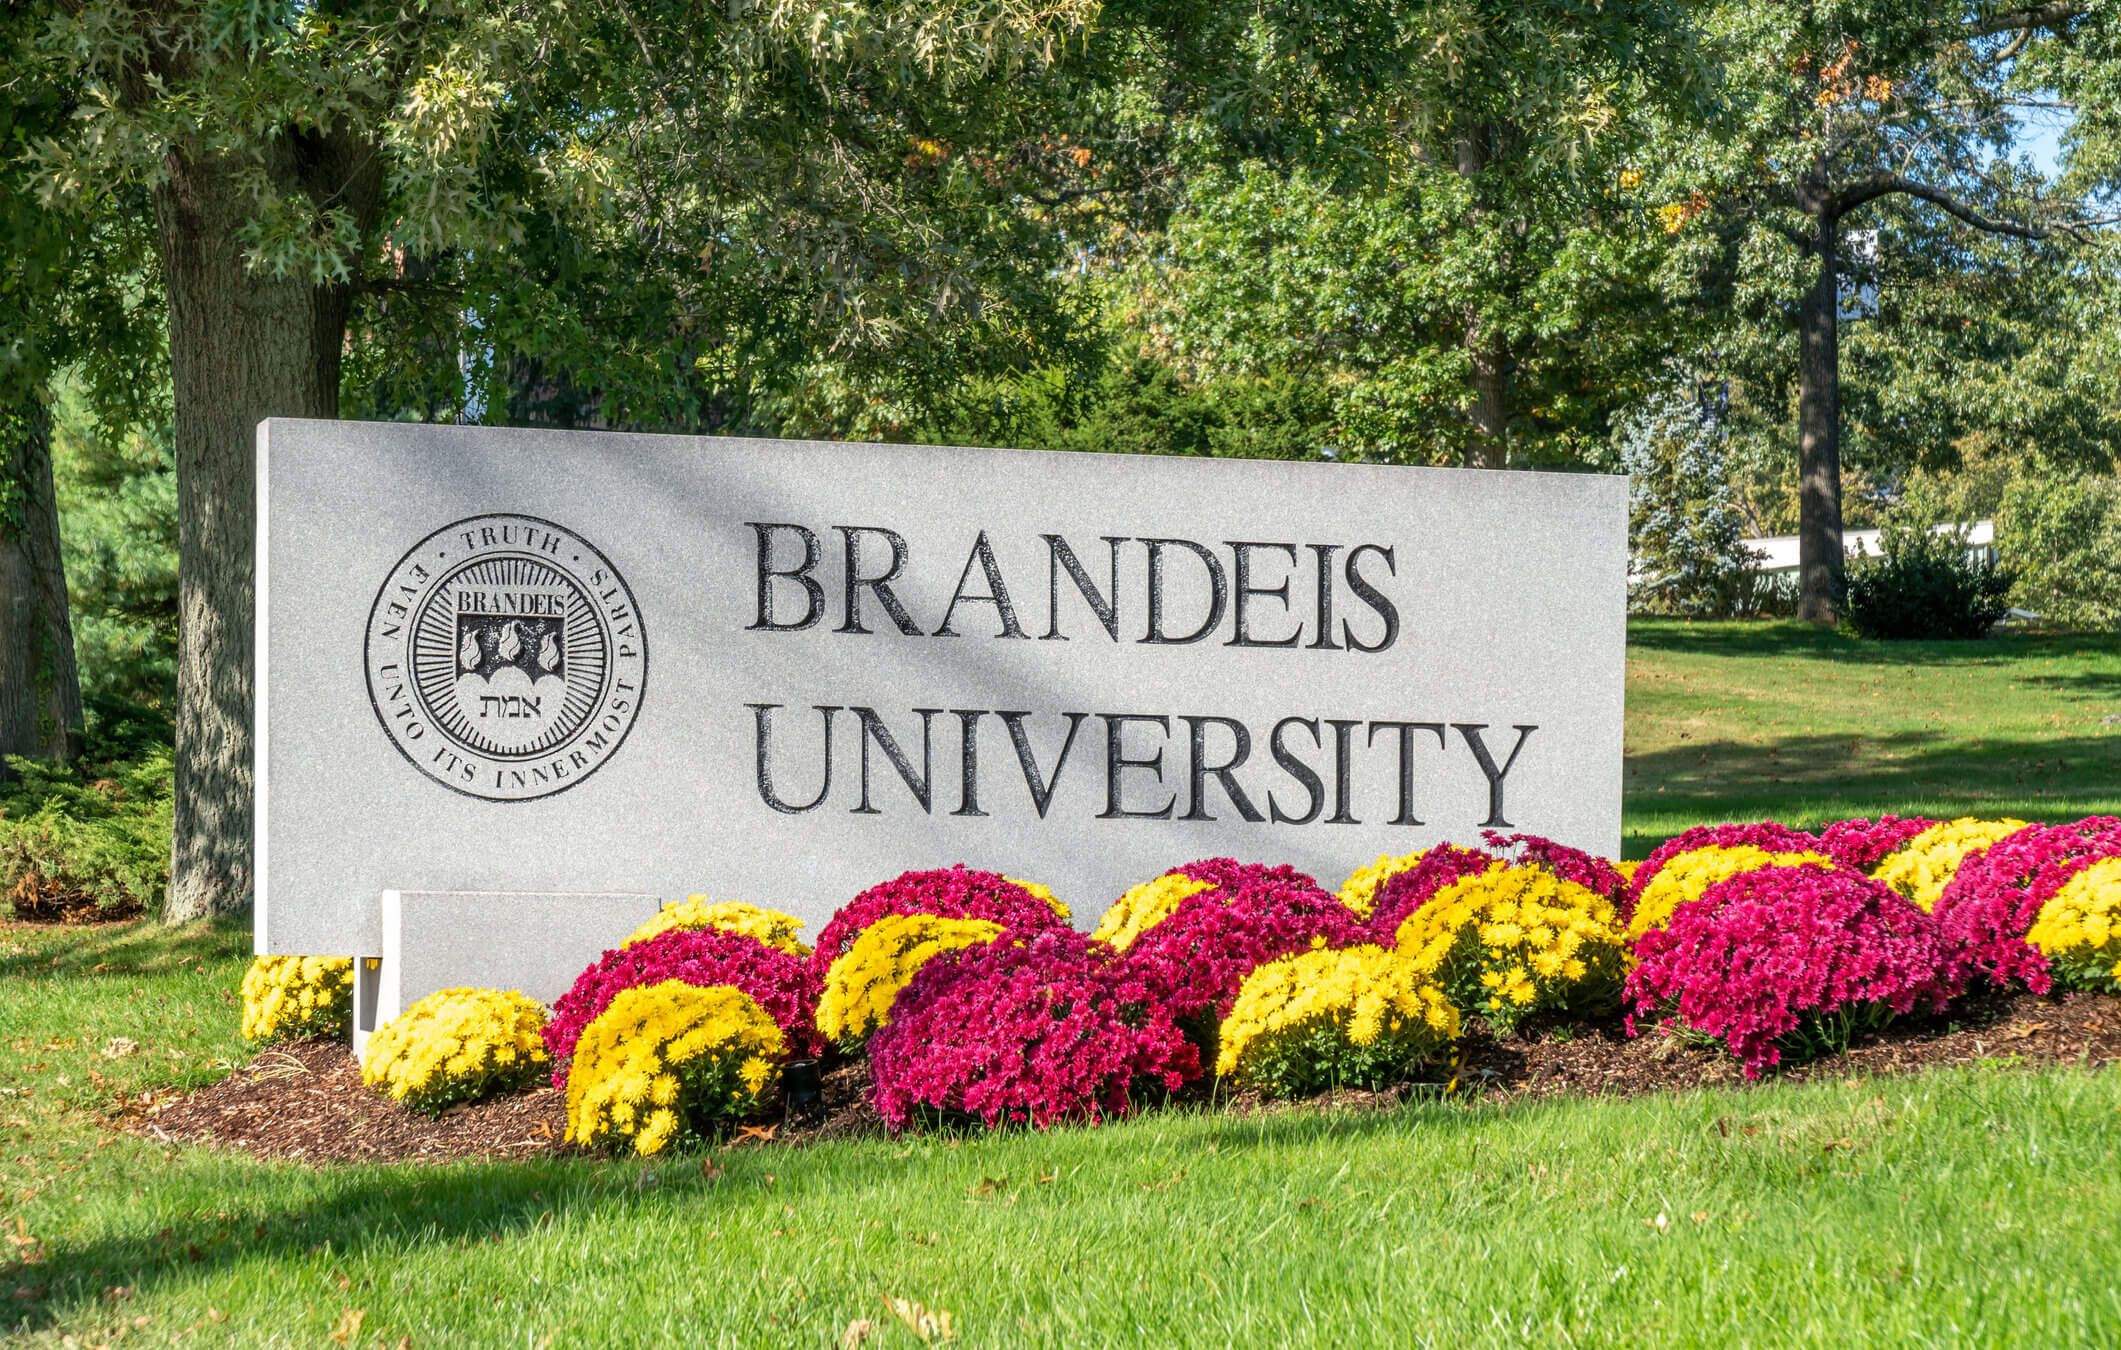 The Brandeis University campus in Waltham, Mass.